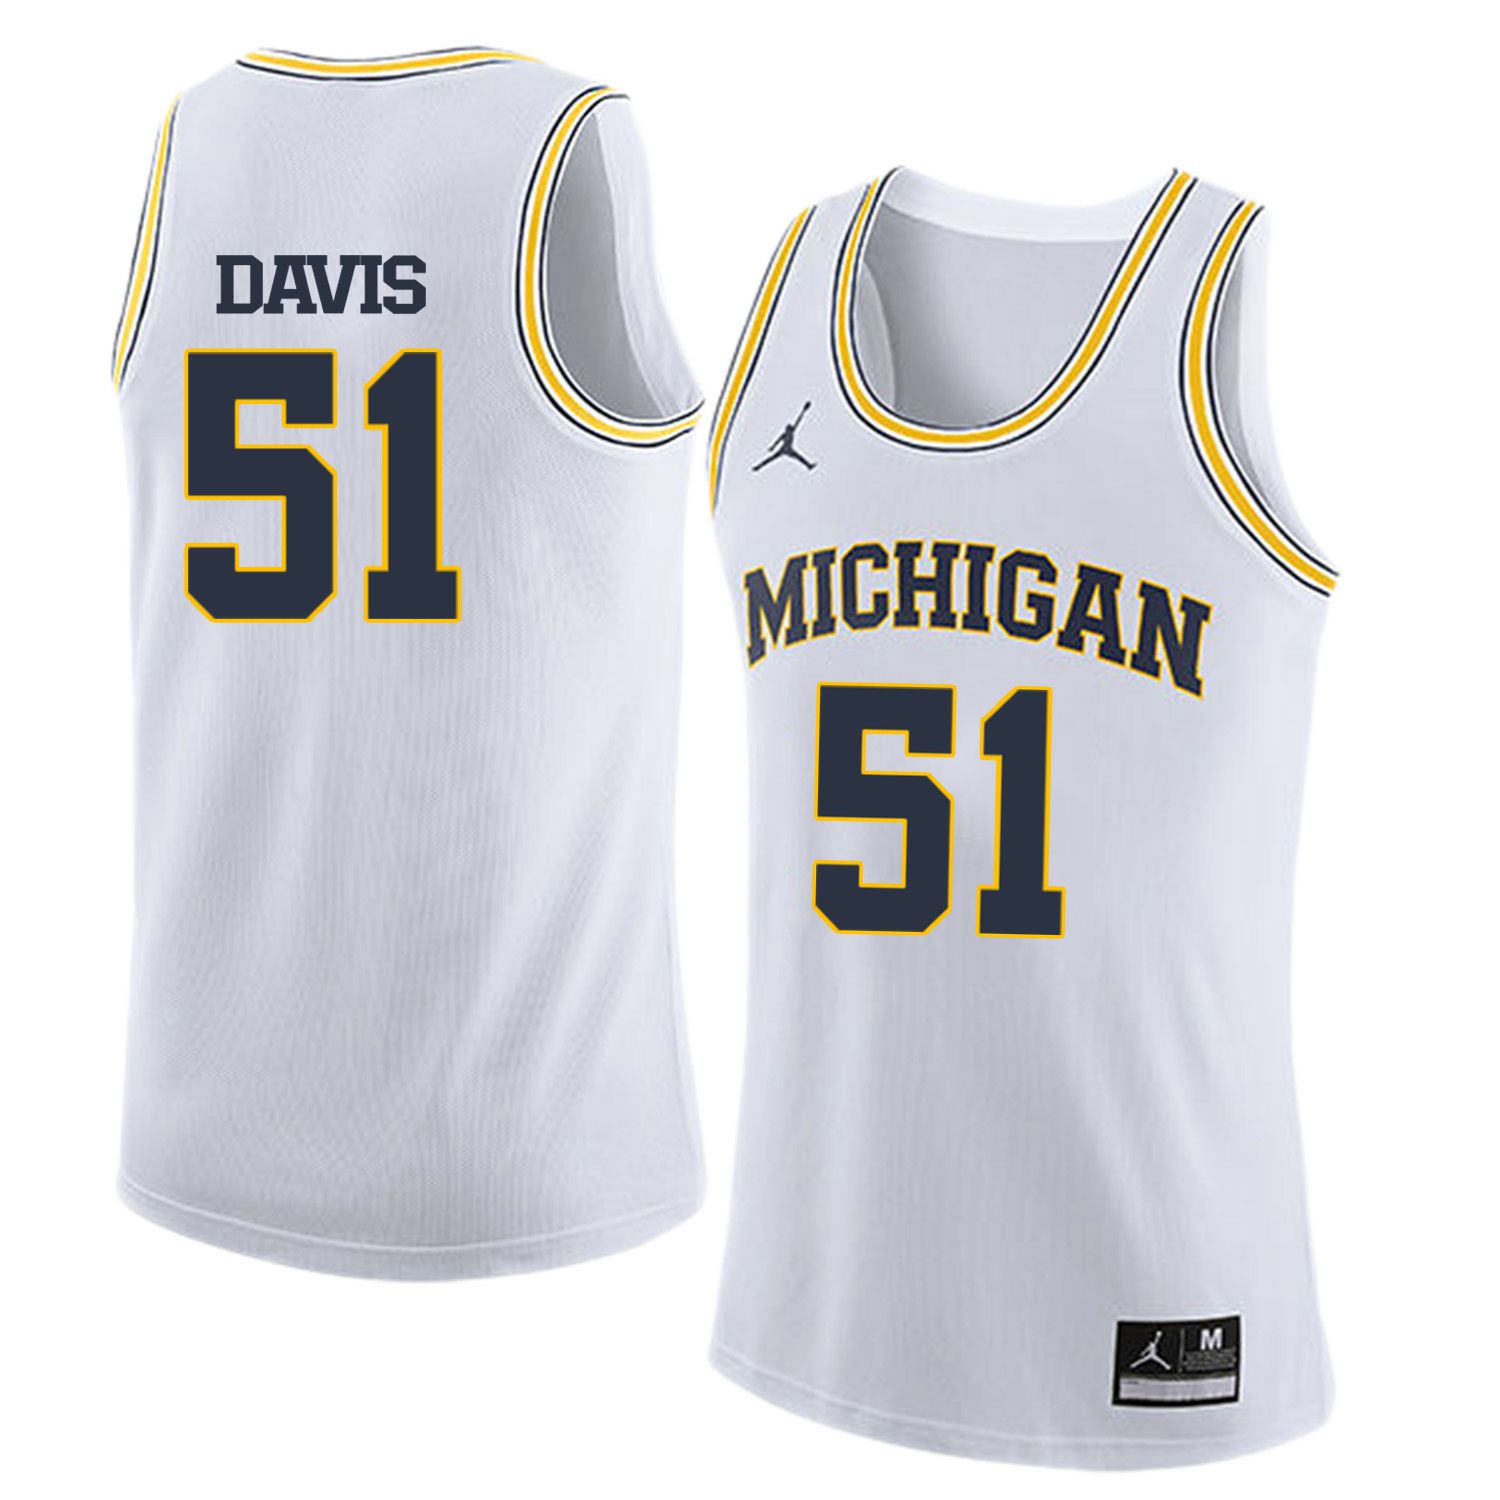 Men Jordan University of Michigan Basketball White 51 Davis Customized NCAA Jerseys